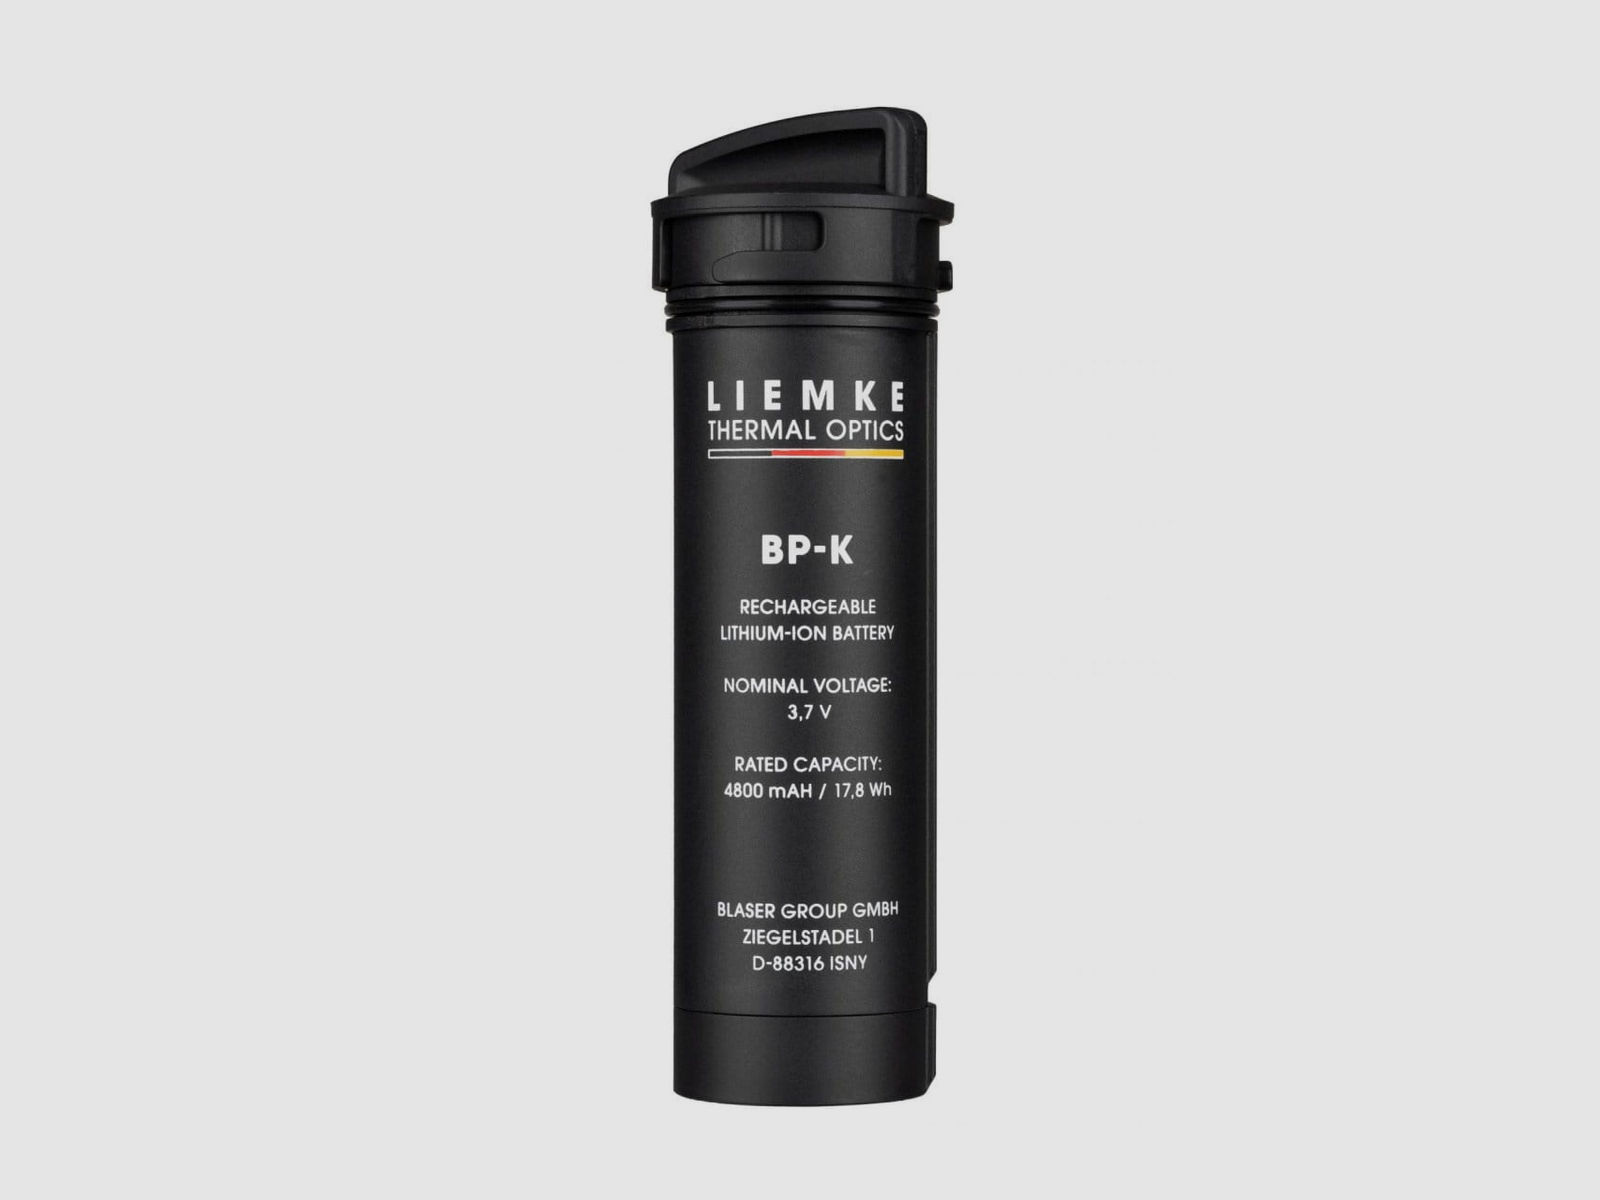 Liemke Battery Kit BP-K für Keiler-1 und Keiler-2 Wärmebildgerät